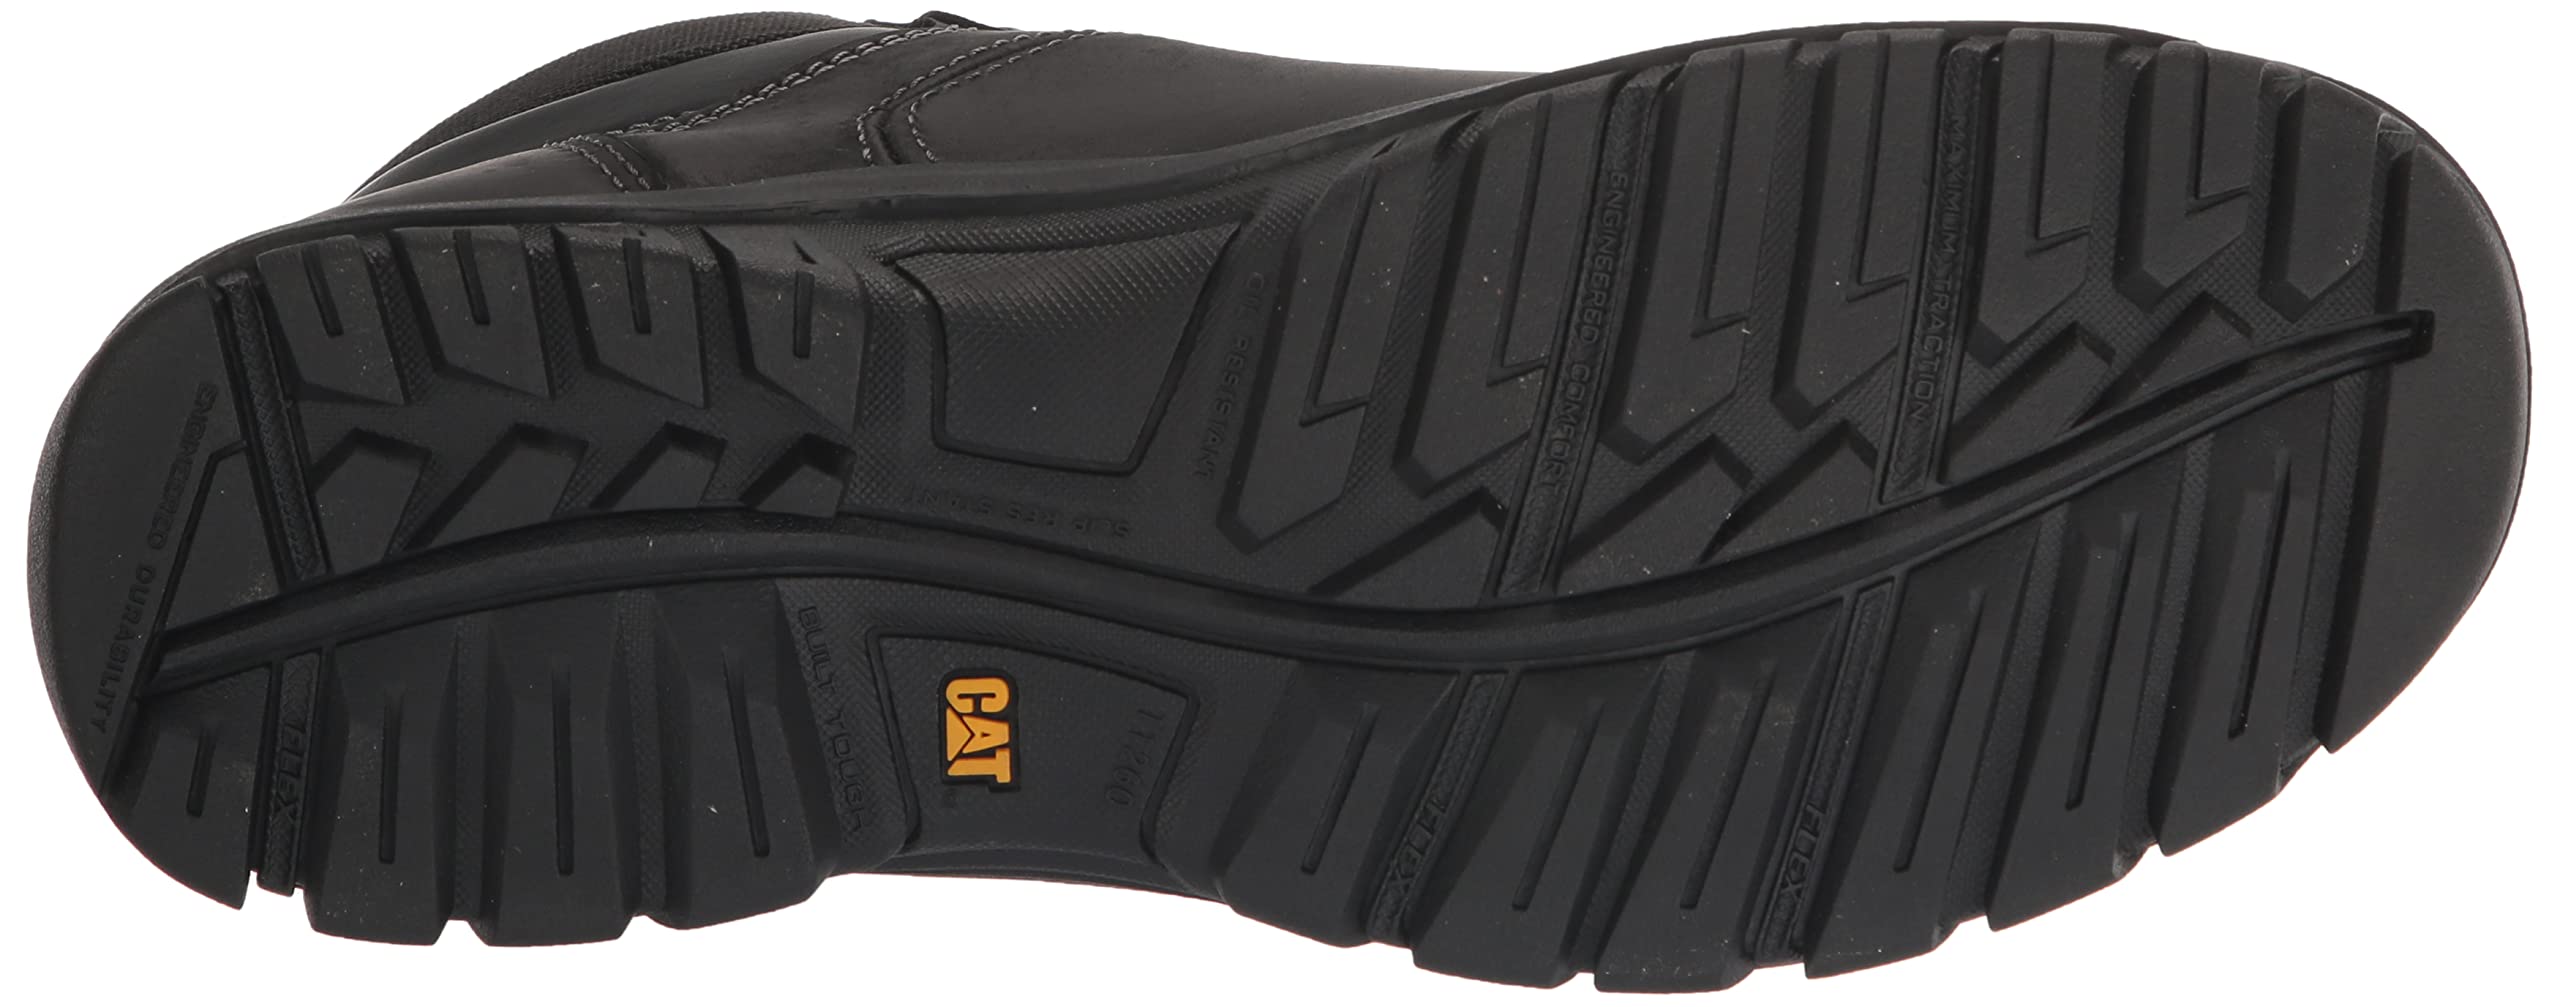 Cat Footwear Men's Threshold Waterproof Soft Toe Work Boot, Black, 11